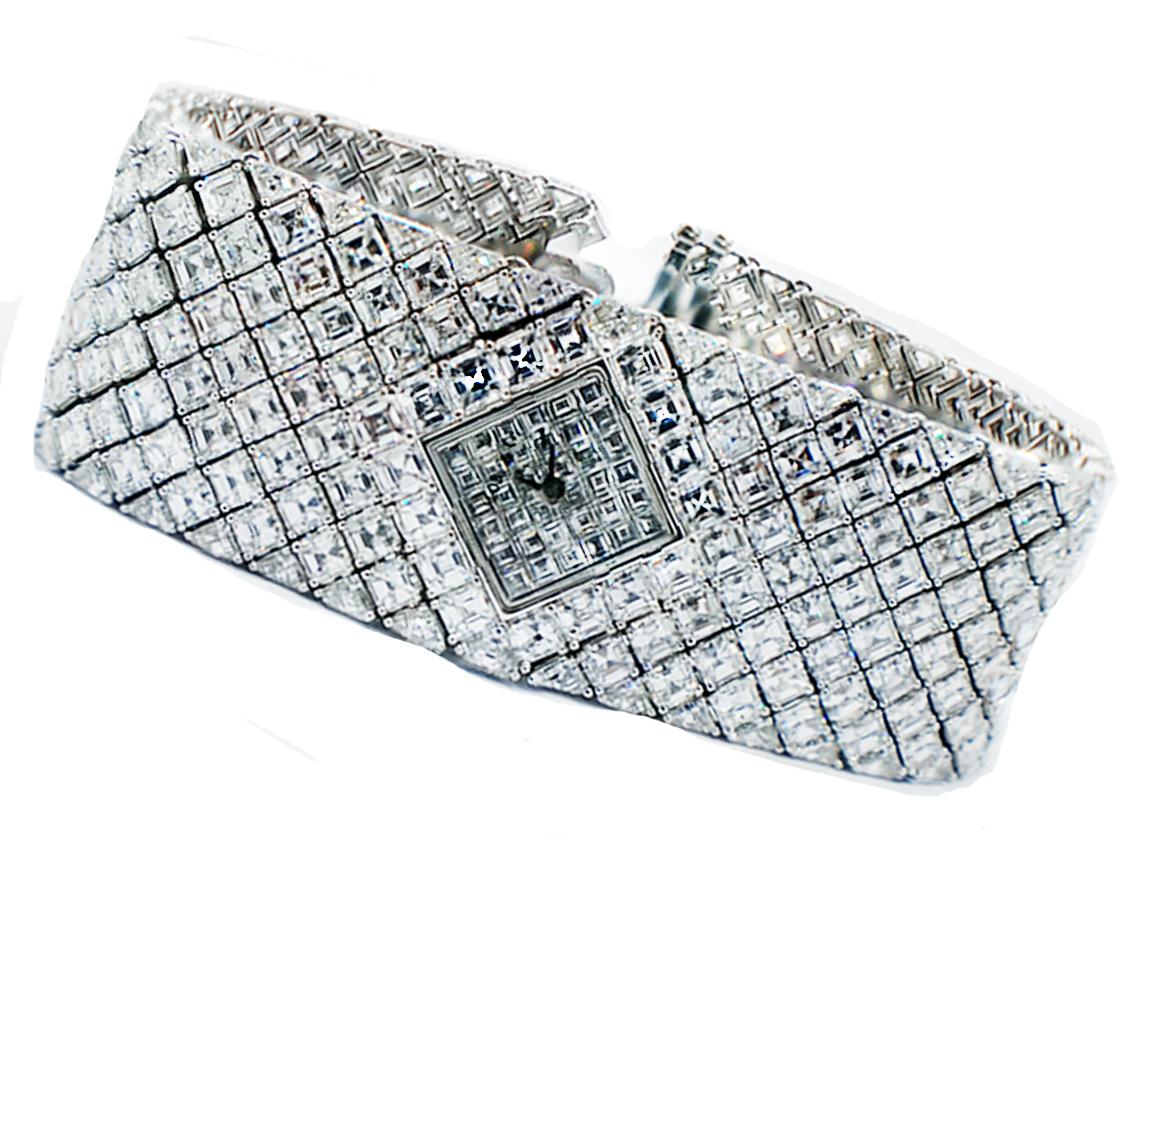 Jacob & Co Infinity Diamond Ladies Watch 50 Carat VS1 E-F Endless Bracelet 4